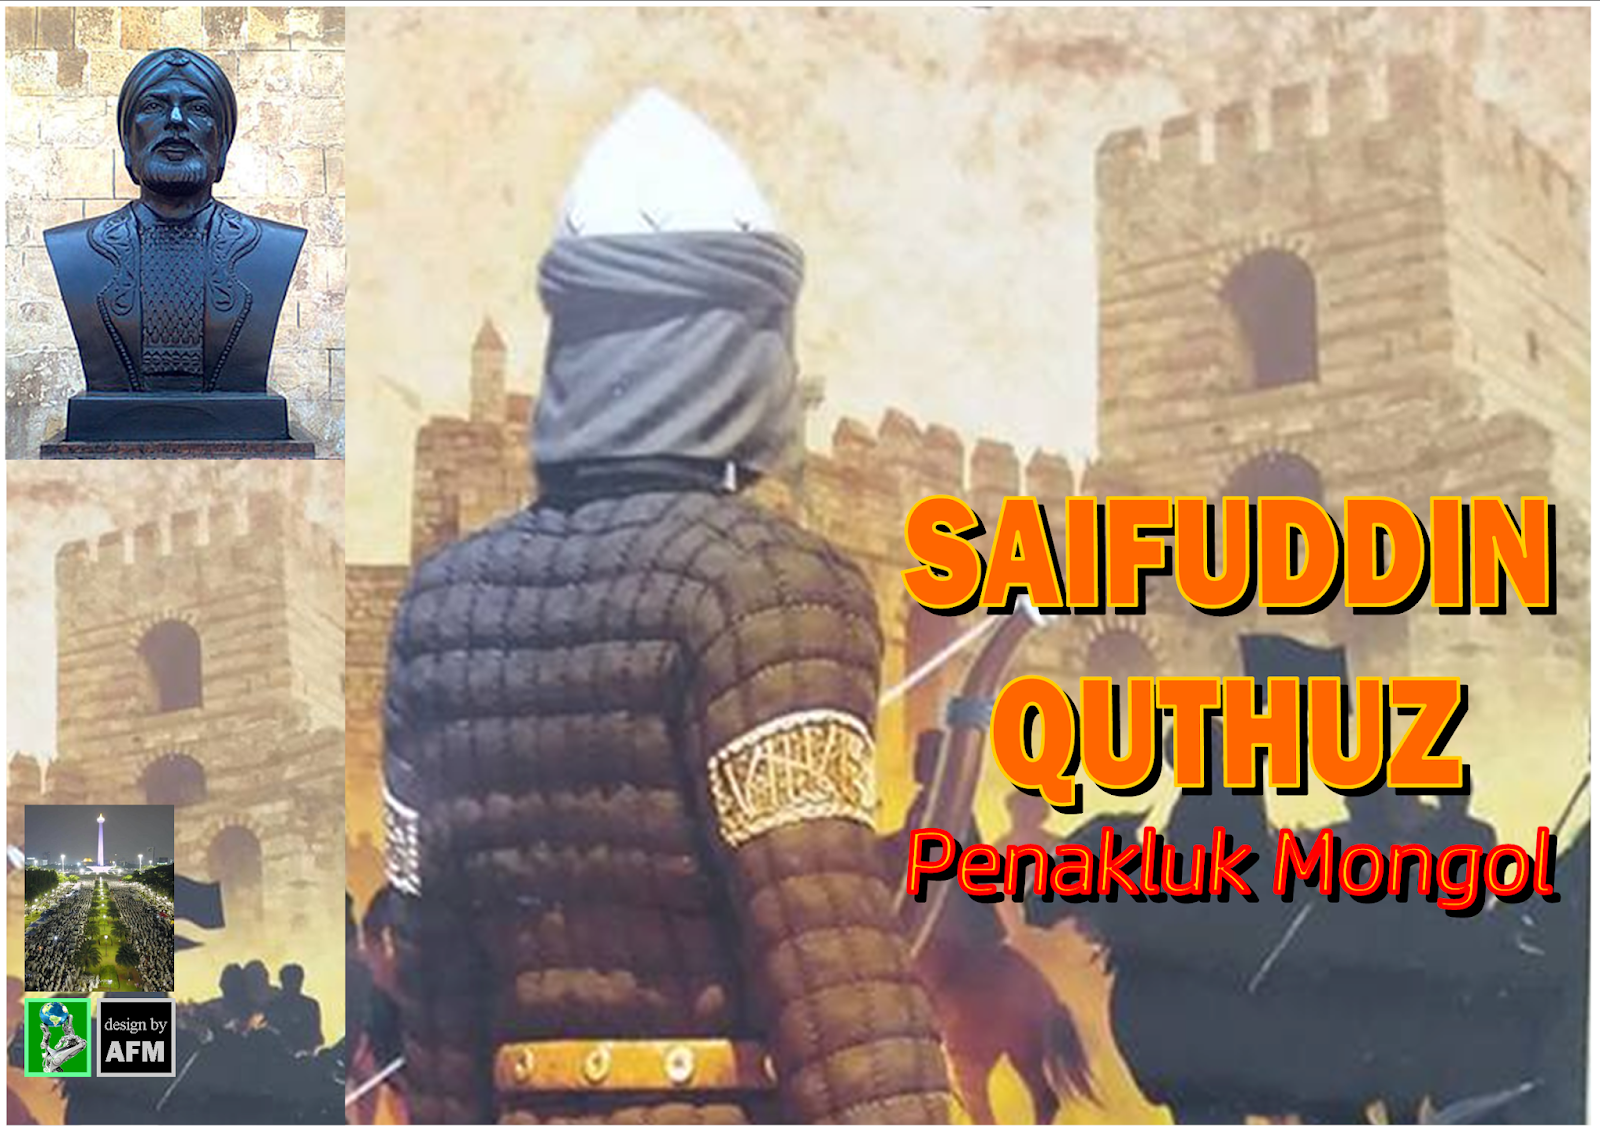 Ilmu: Jendela Memahami Dunia: Saifuddin Quthuz Penakluk Mongol